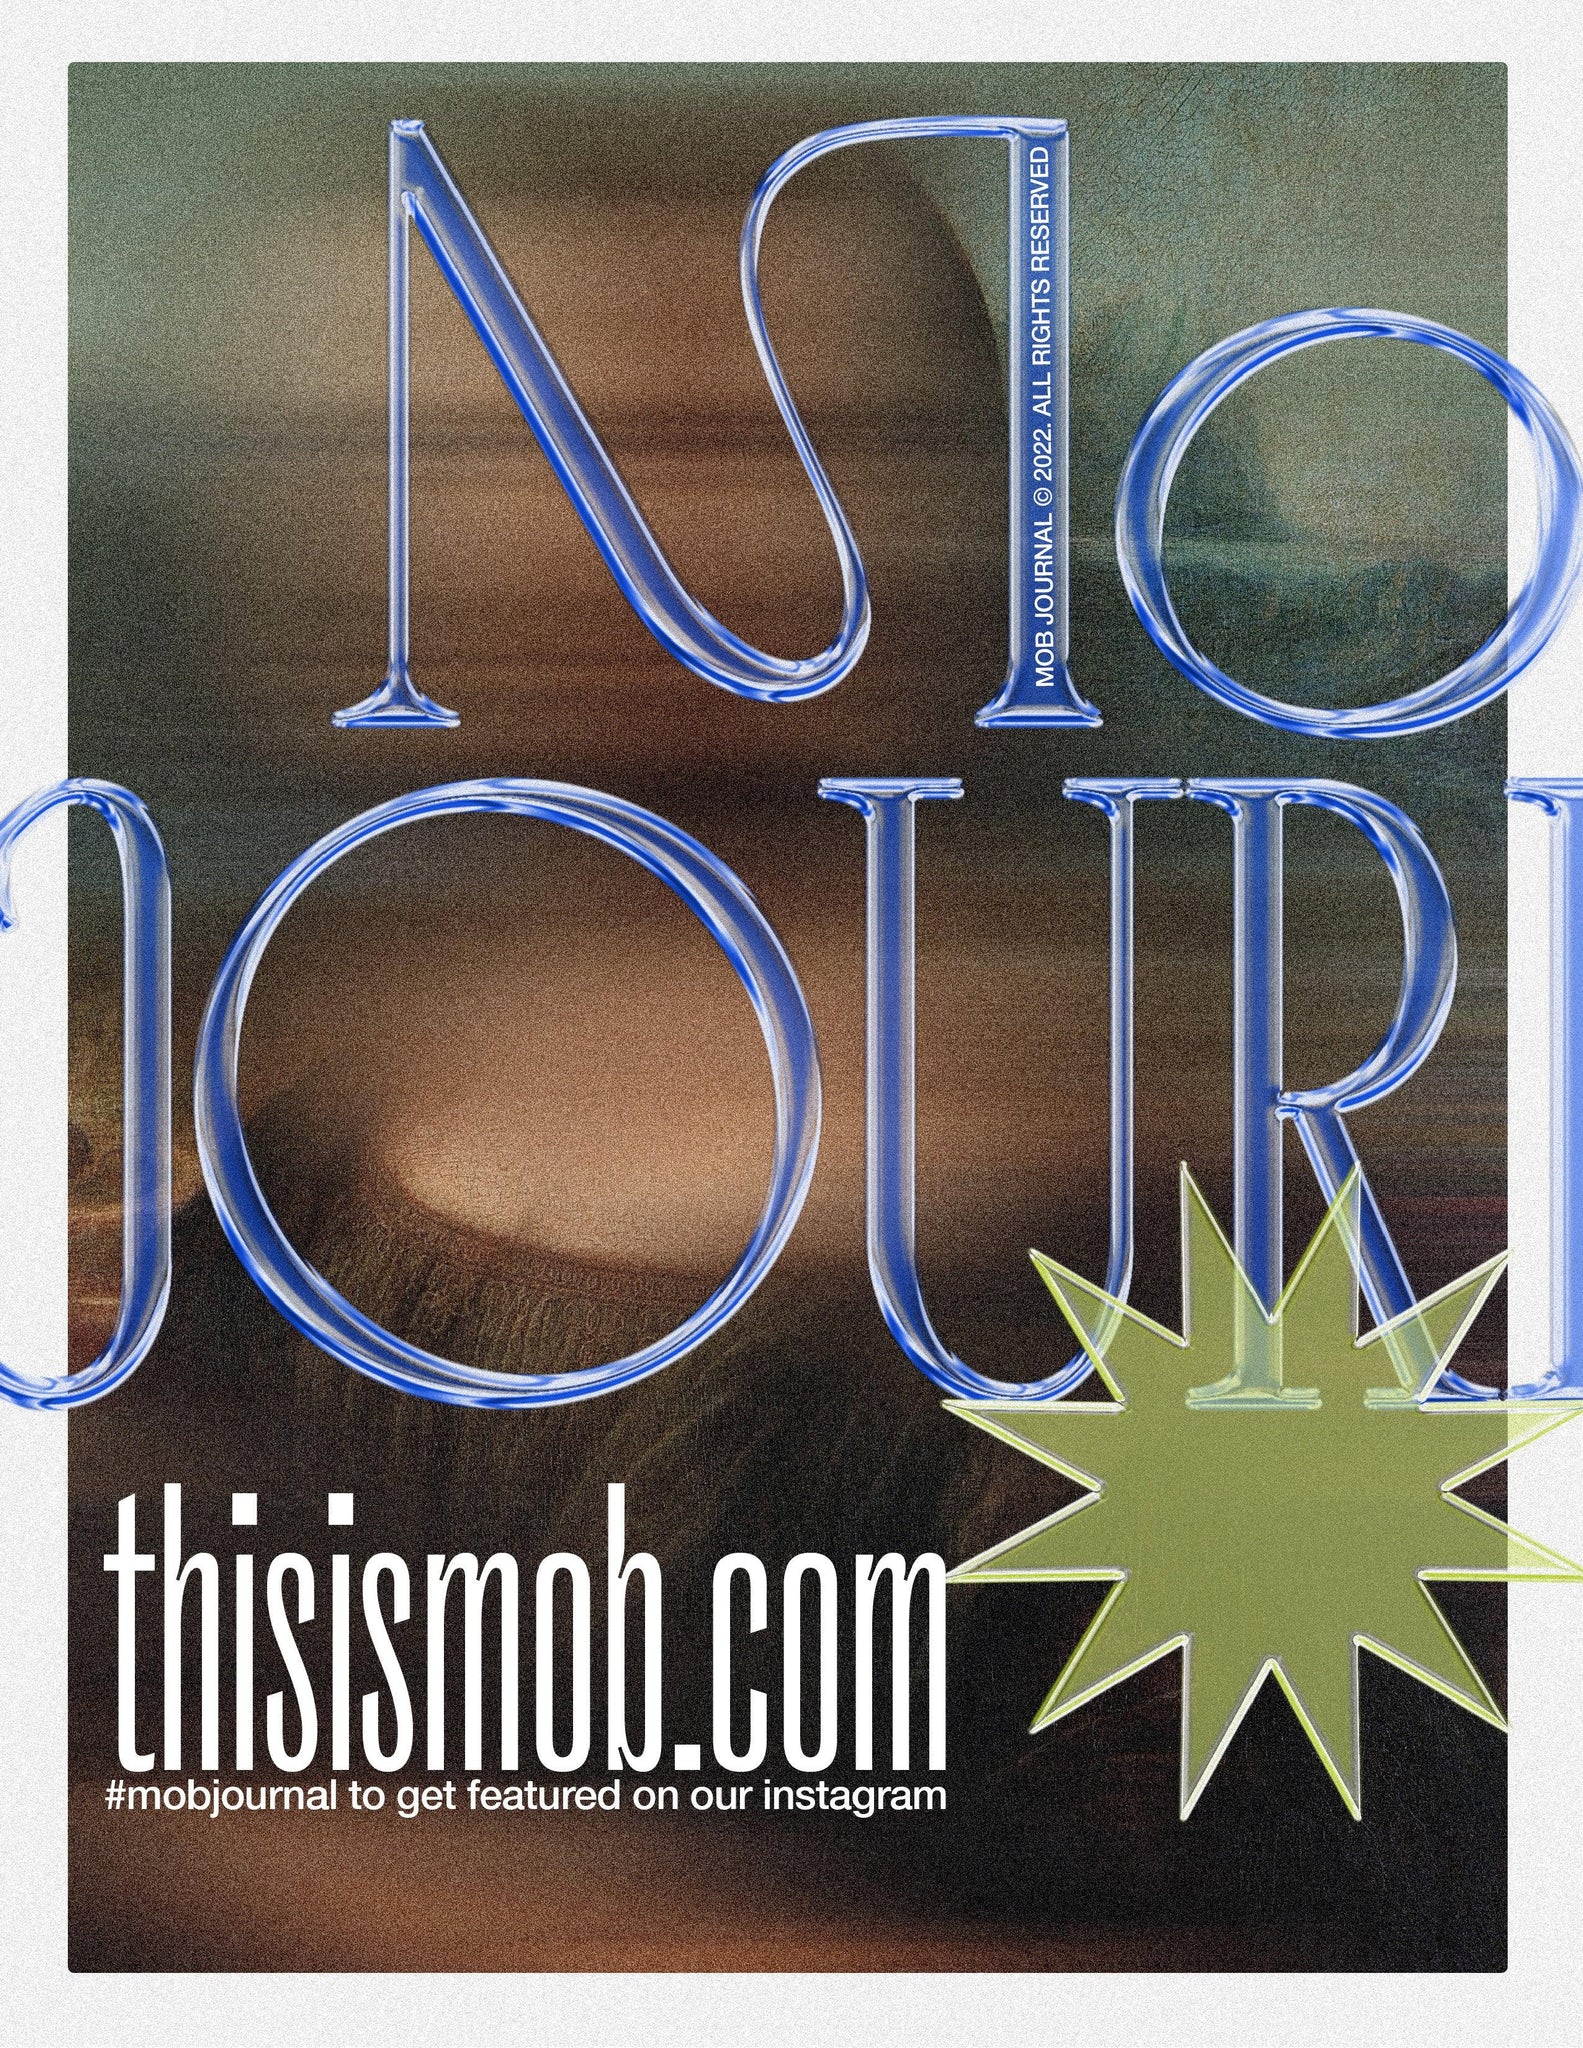 MOB JOURNAL | VOLUME TWENTY FIVE | ISSUE #14 - Mob Journal